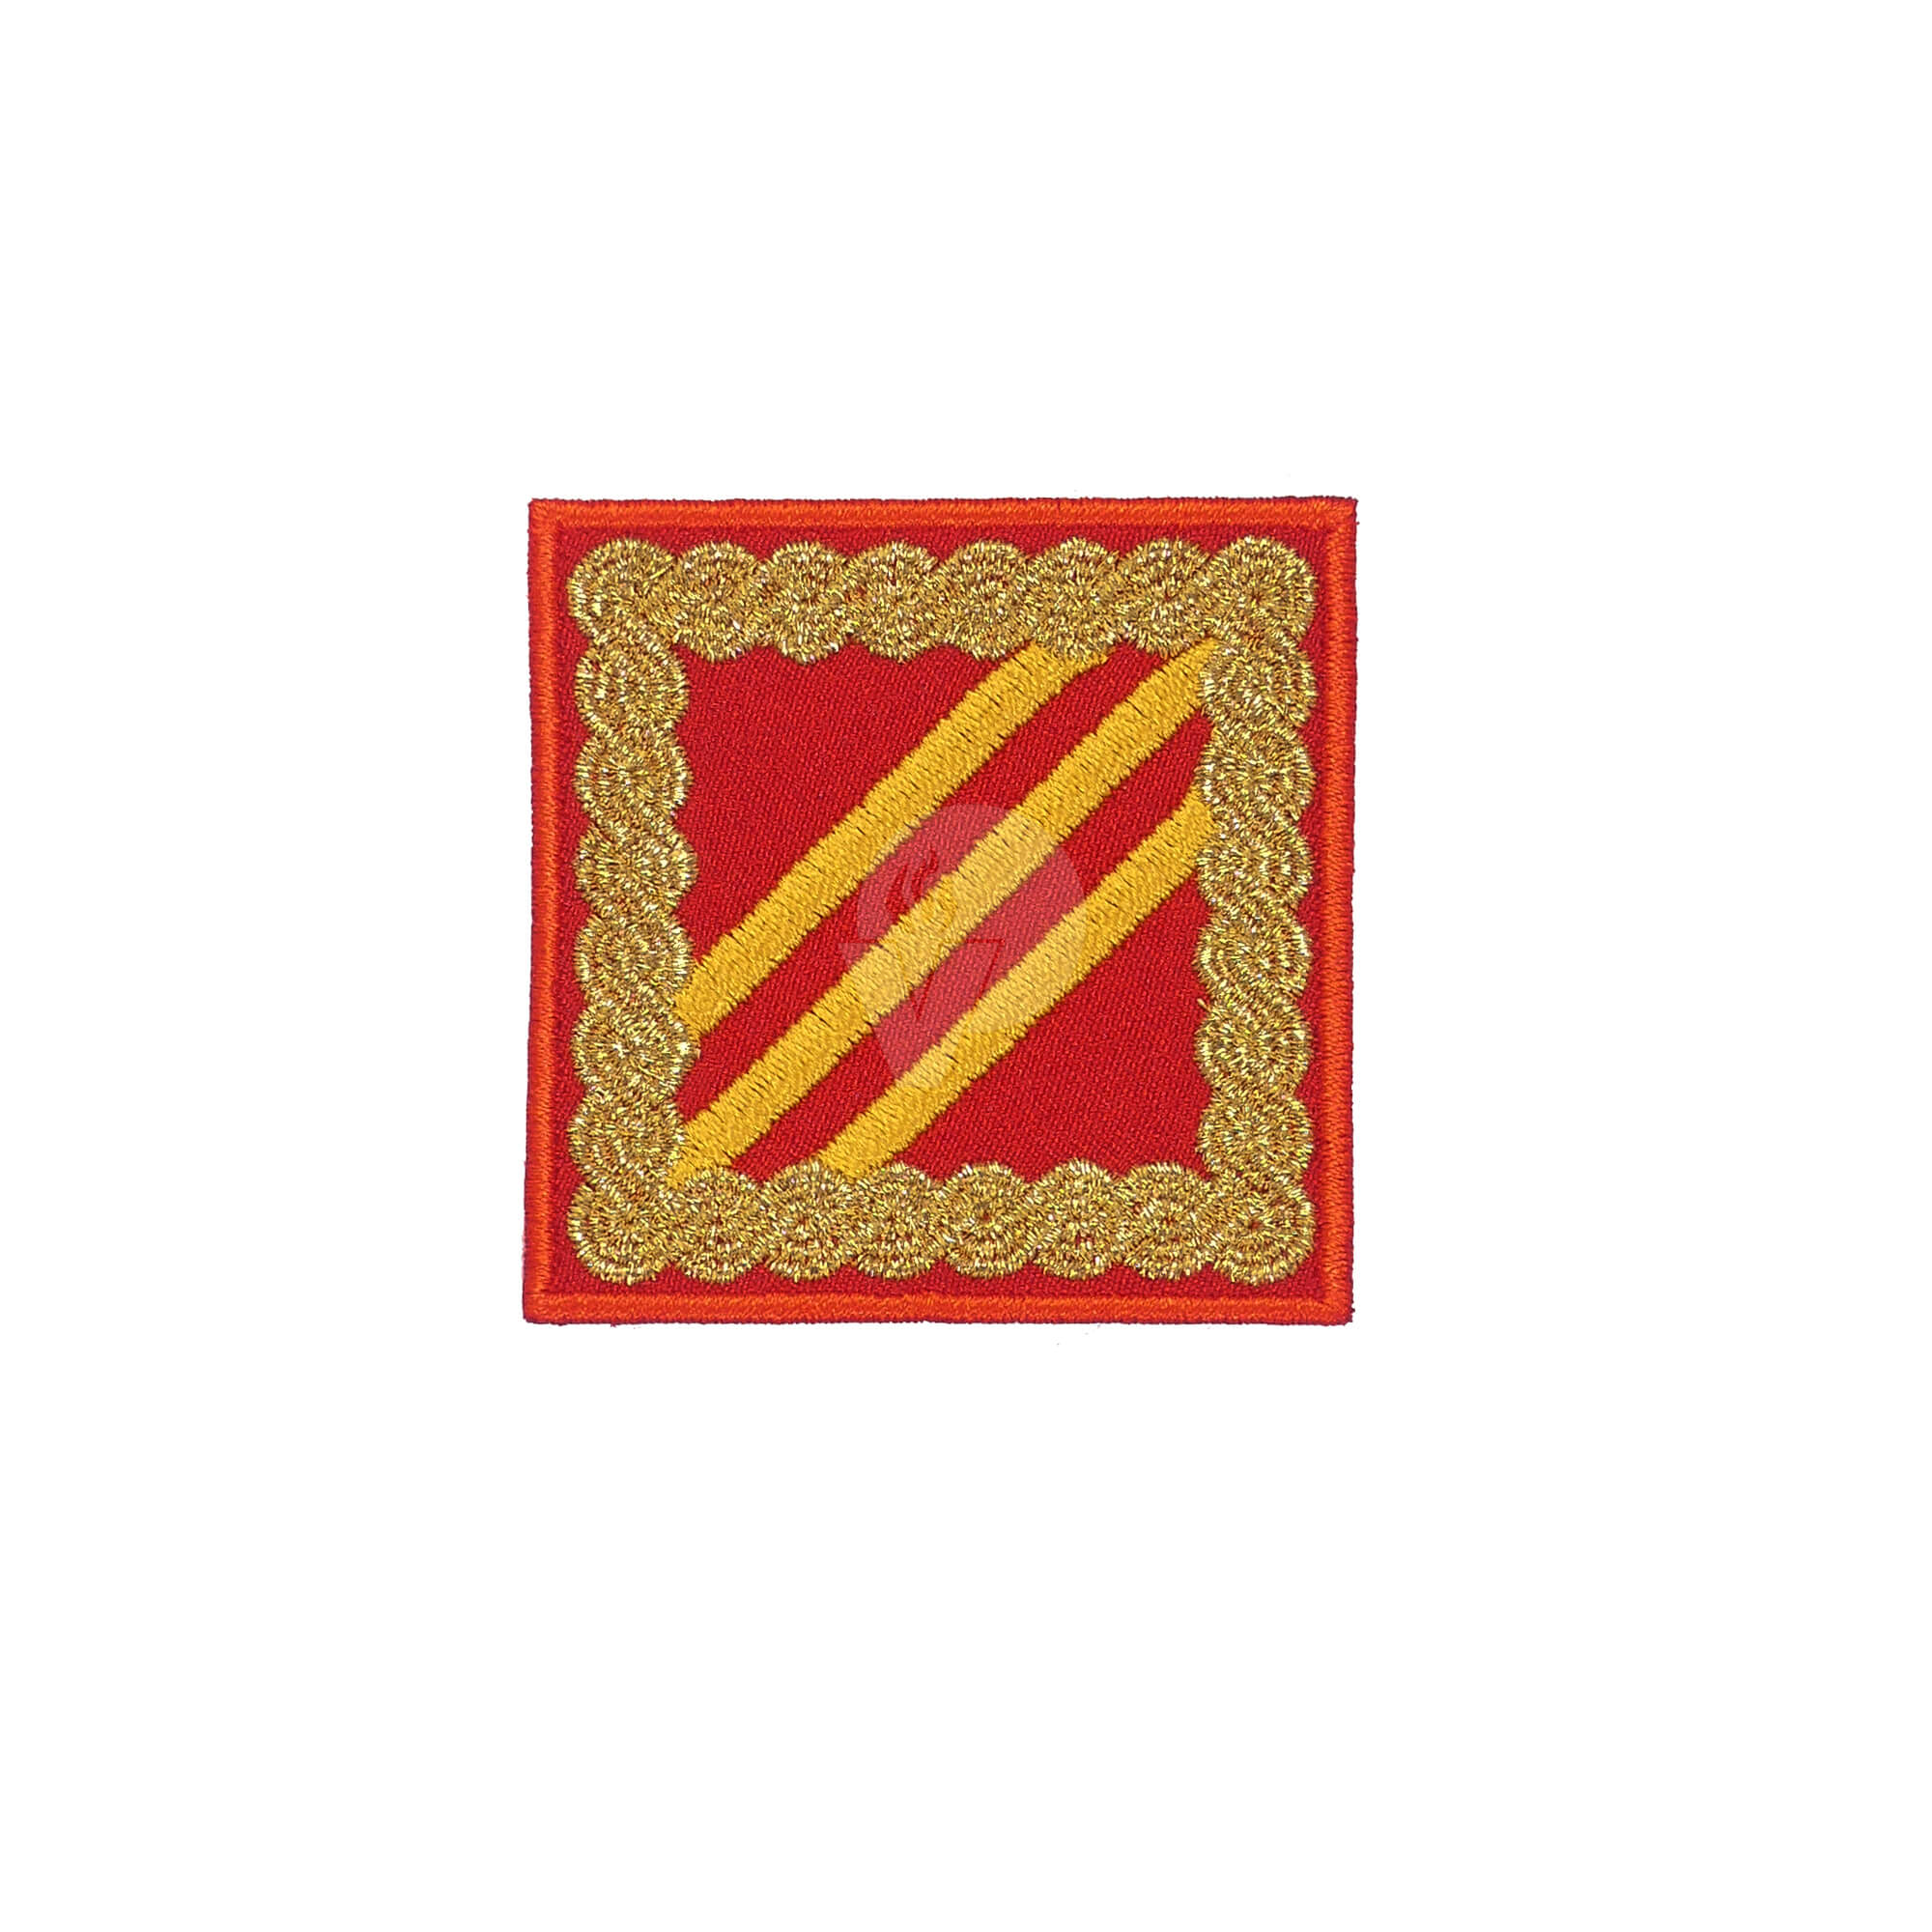 Oznake radnih mjesta profesionalnih vatrogasaca, Zapovjednik vatrogasne postrojbe